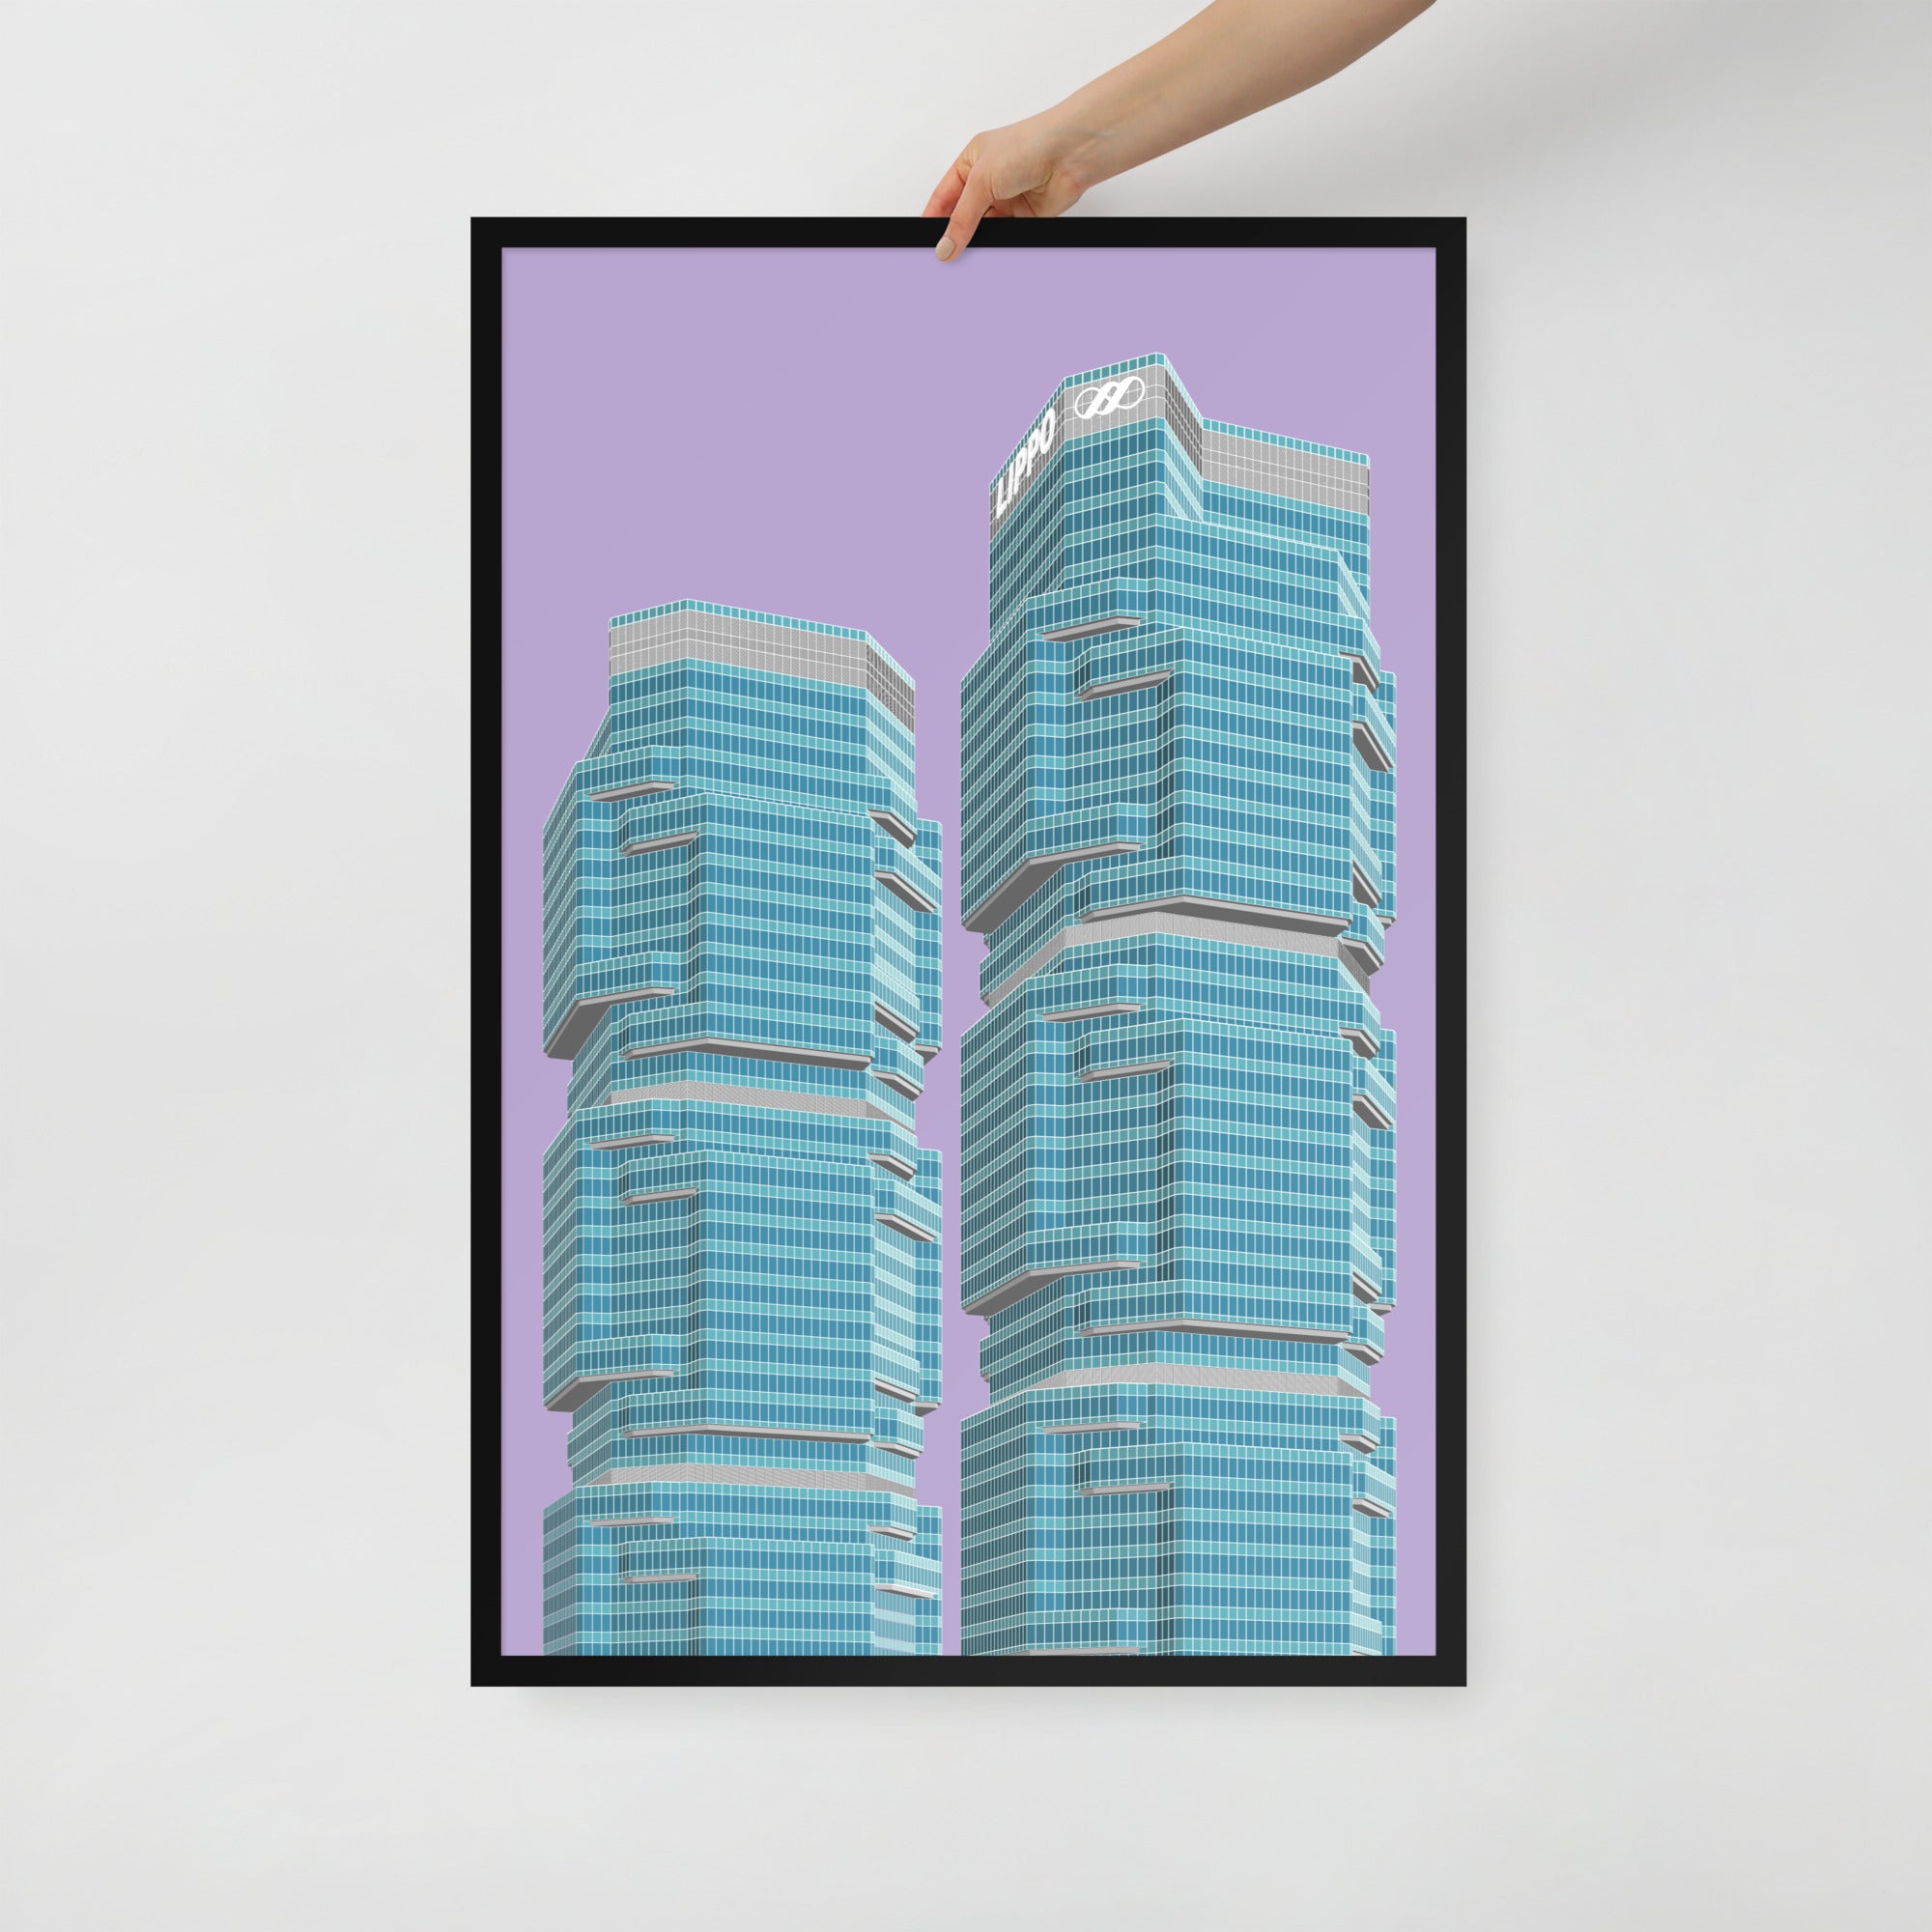 Lippo Centre Framed Prints